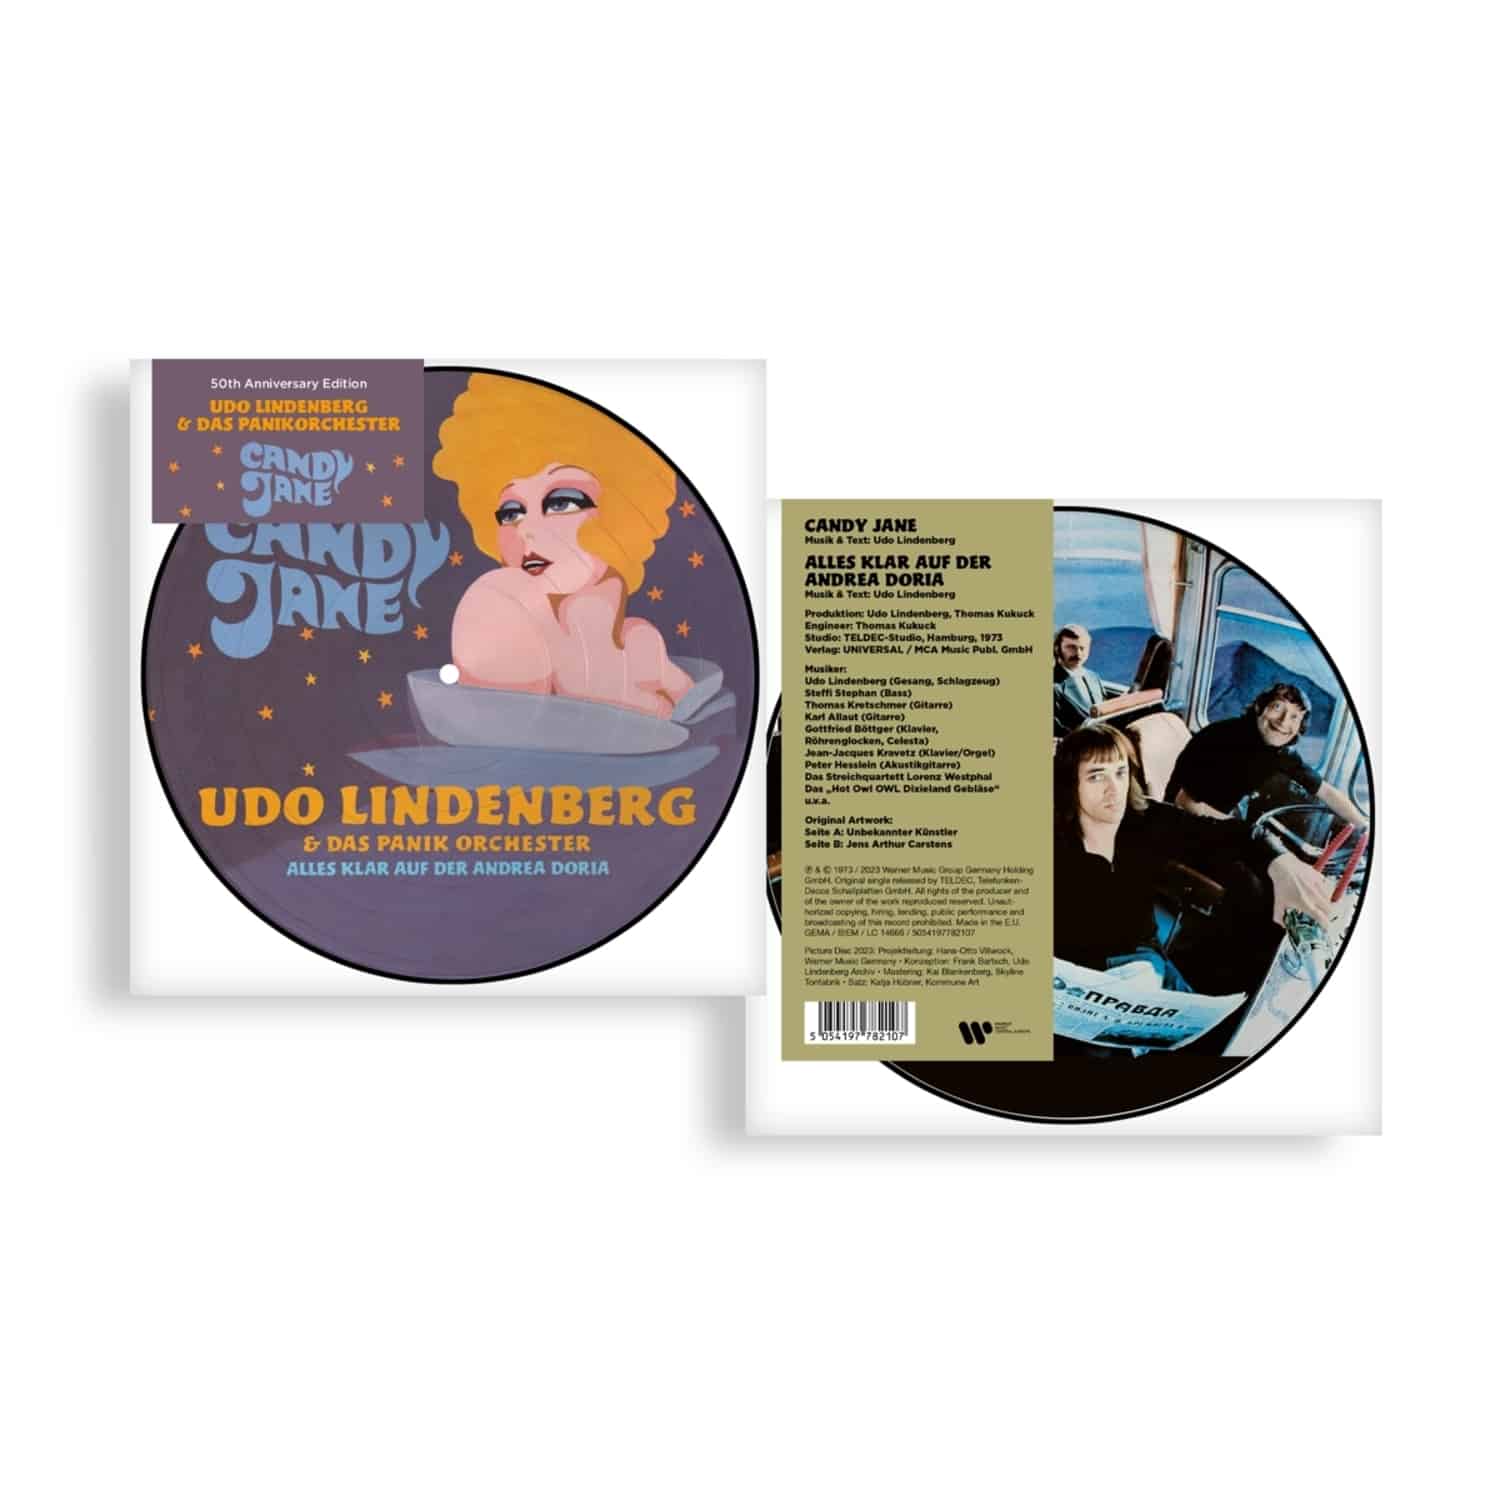 Udo Lindenberg & Das Panik-Orchester - CANDY JANE / ALLES KLAR AUF DER ANDREA DORIA 